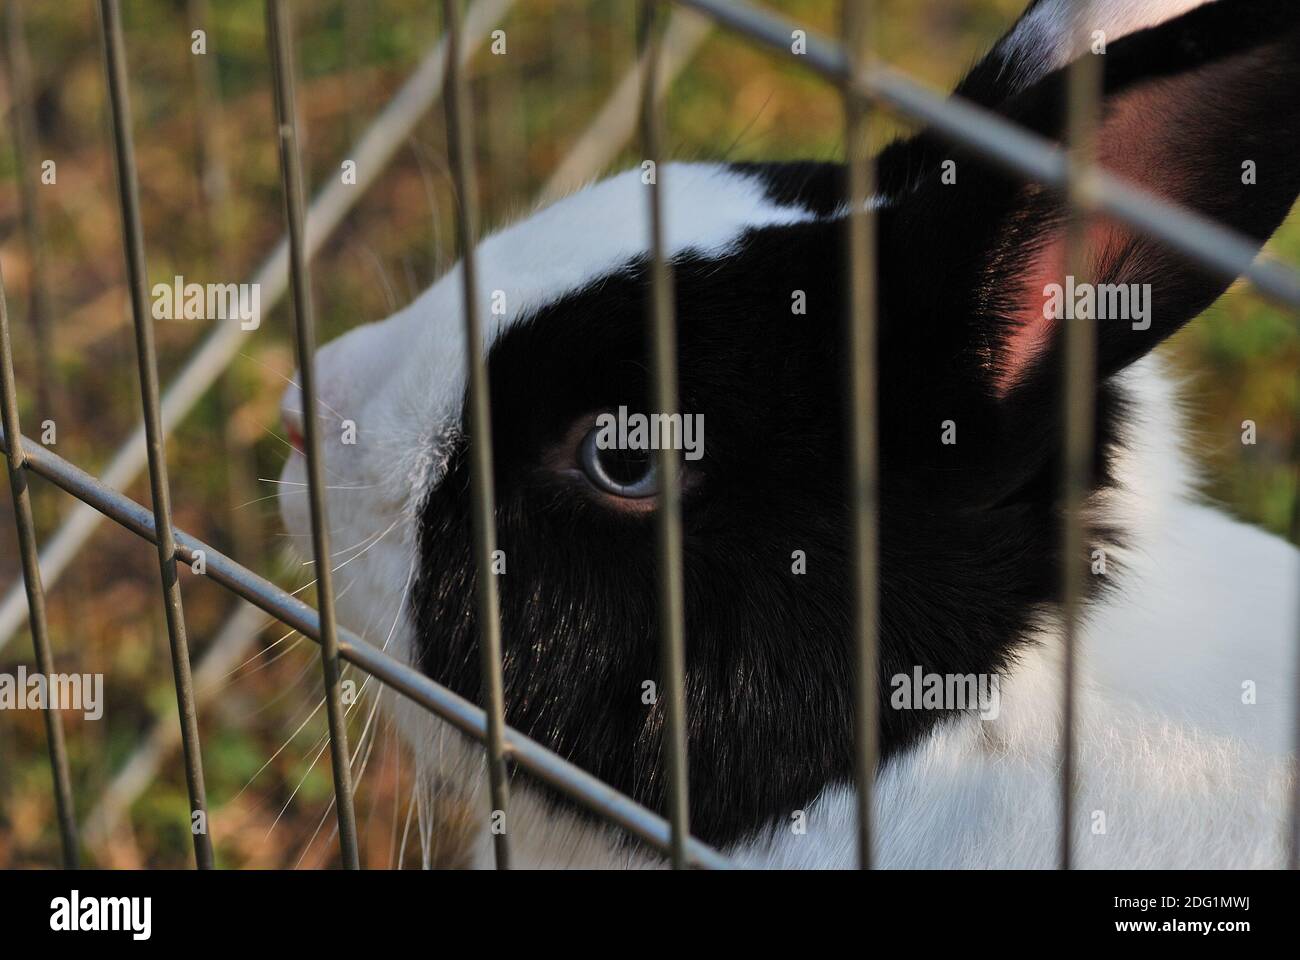 Black rabbit grid Stock Photo